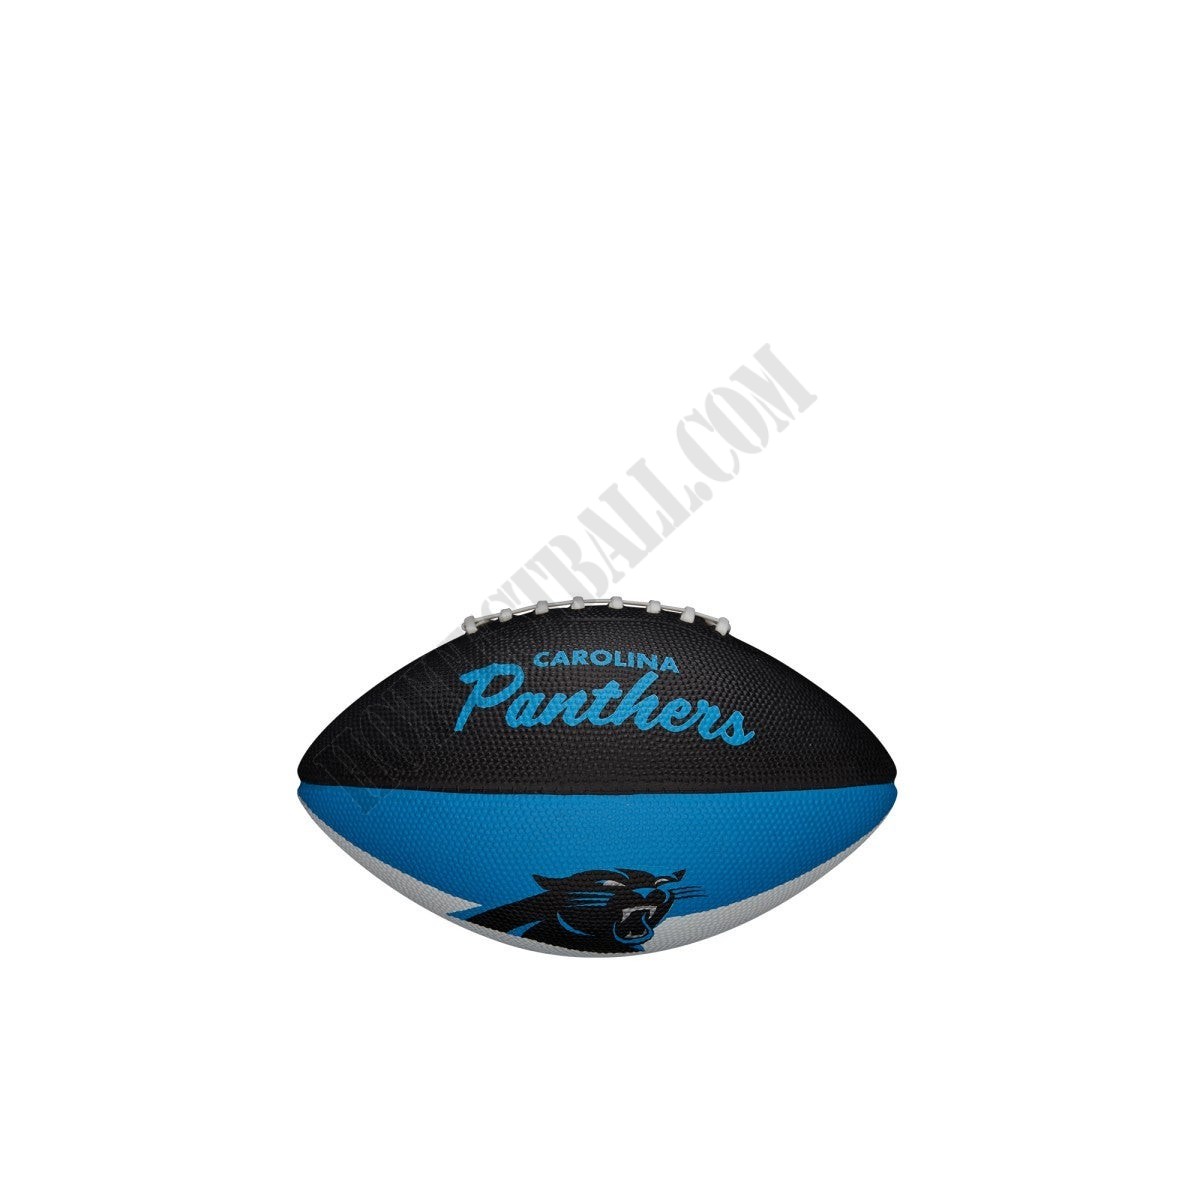 NFL Retro Mini Football - Carolina Panthers ● Wilson Promotions - -4